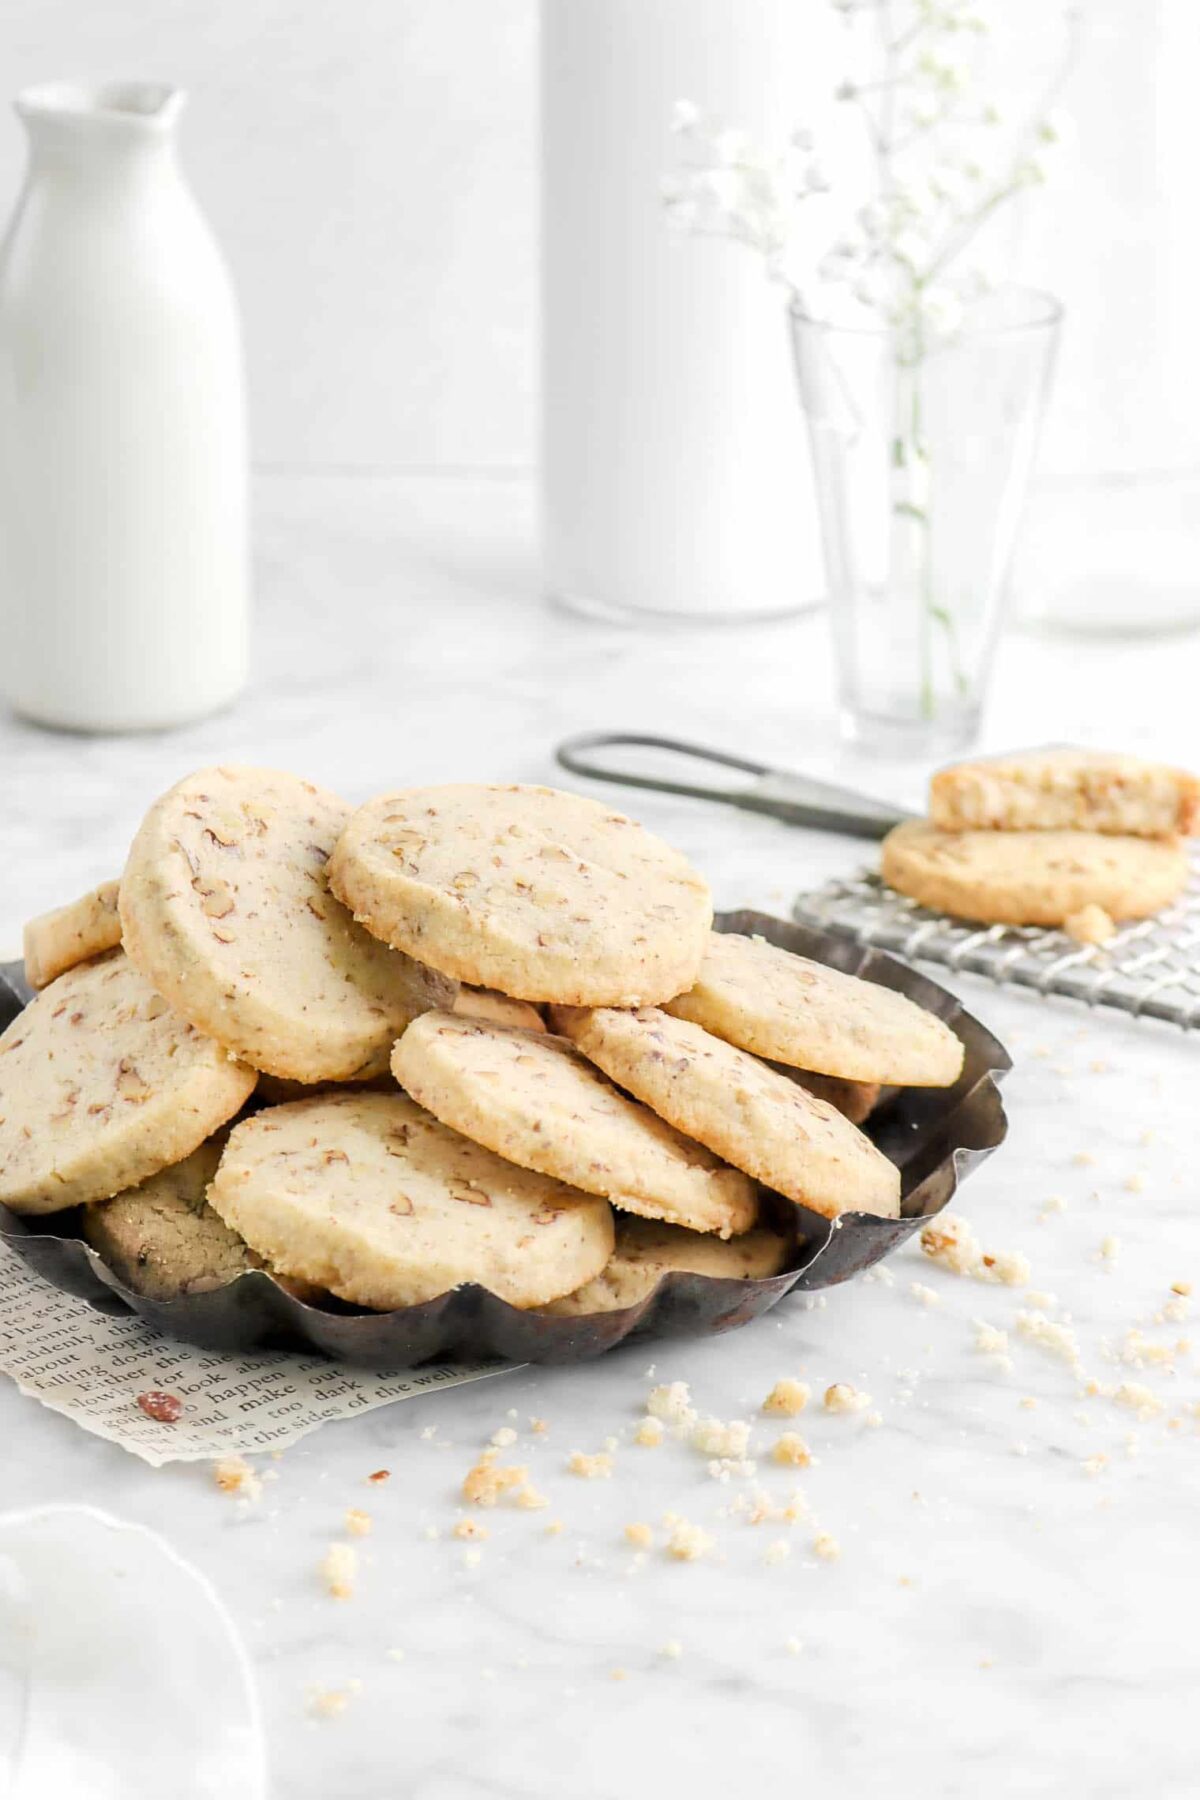 Slice and Bake Pecan Shortbread Cookies